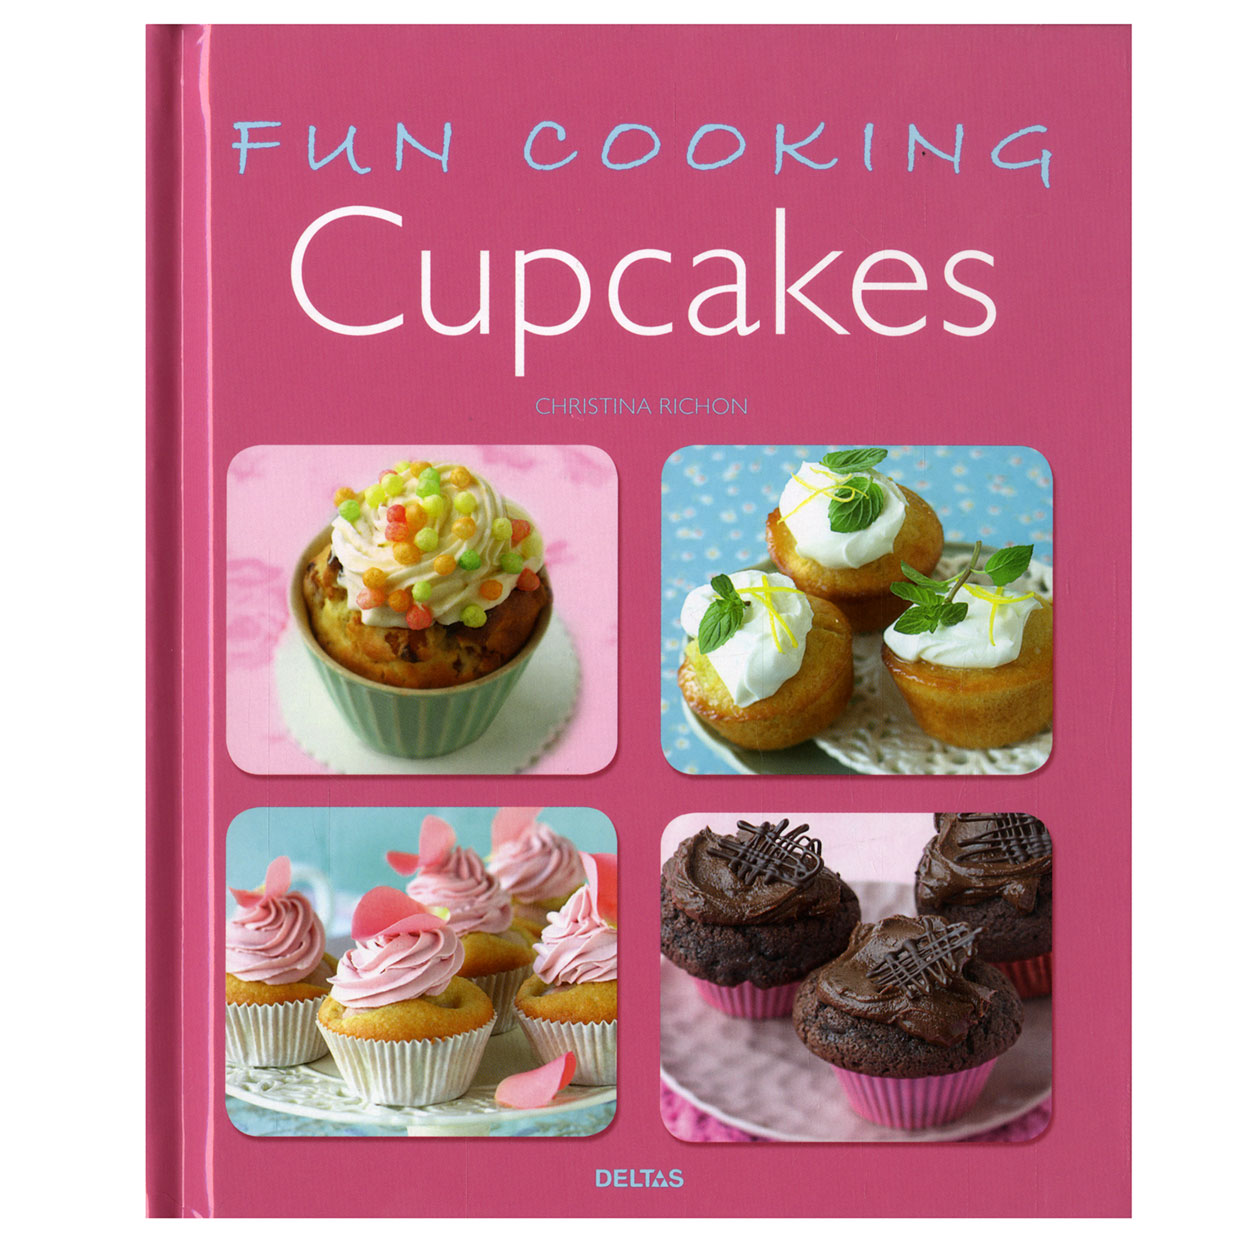 Fun Cooking Cupcakes